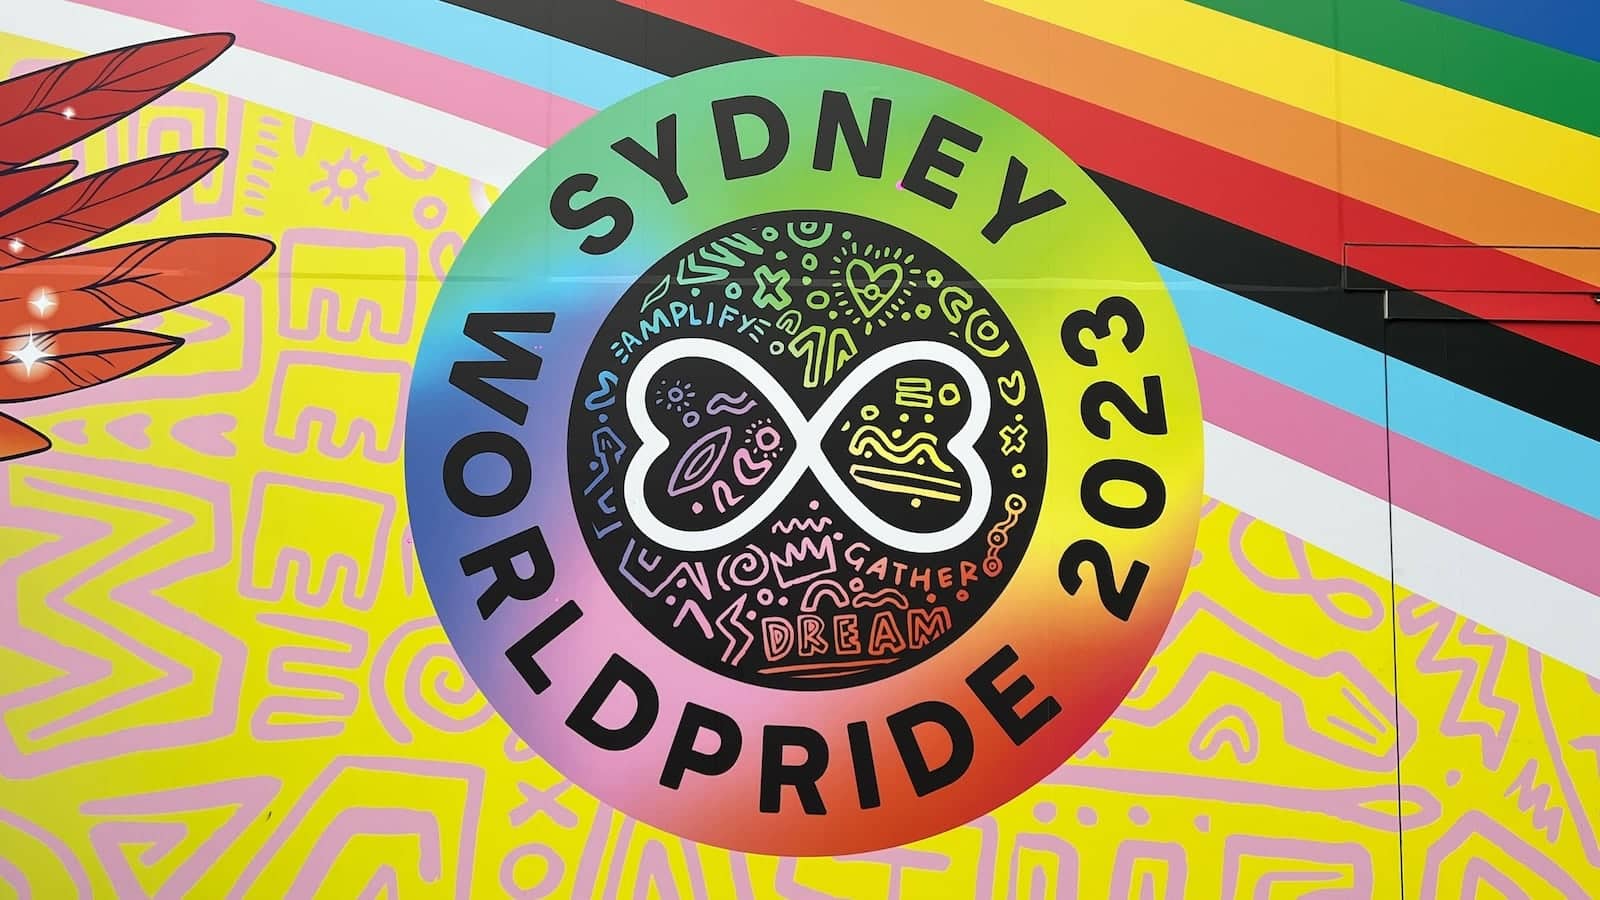 Sydney WorldPride 2023 sign.